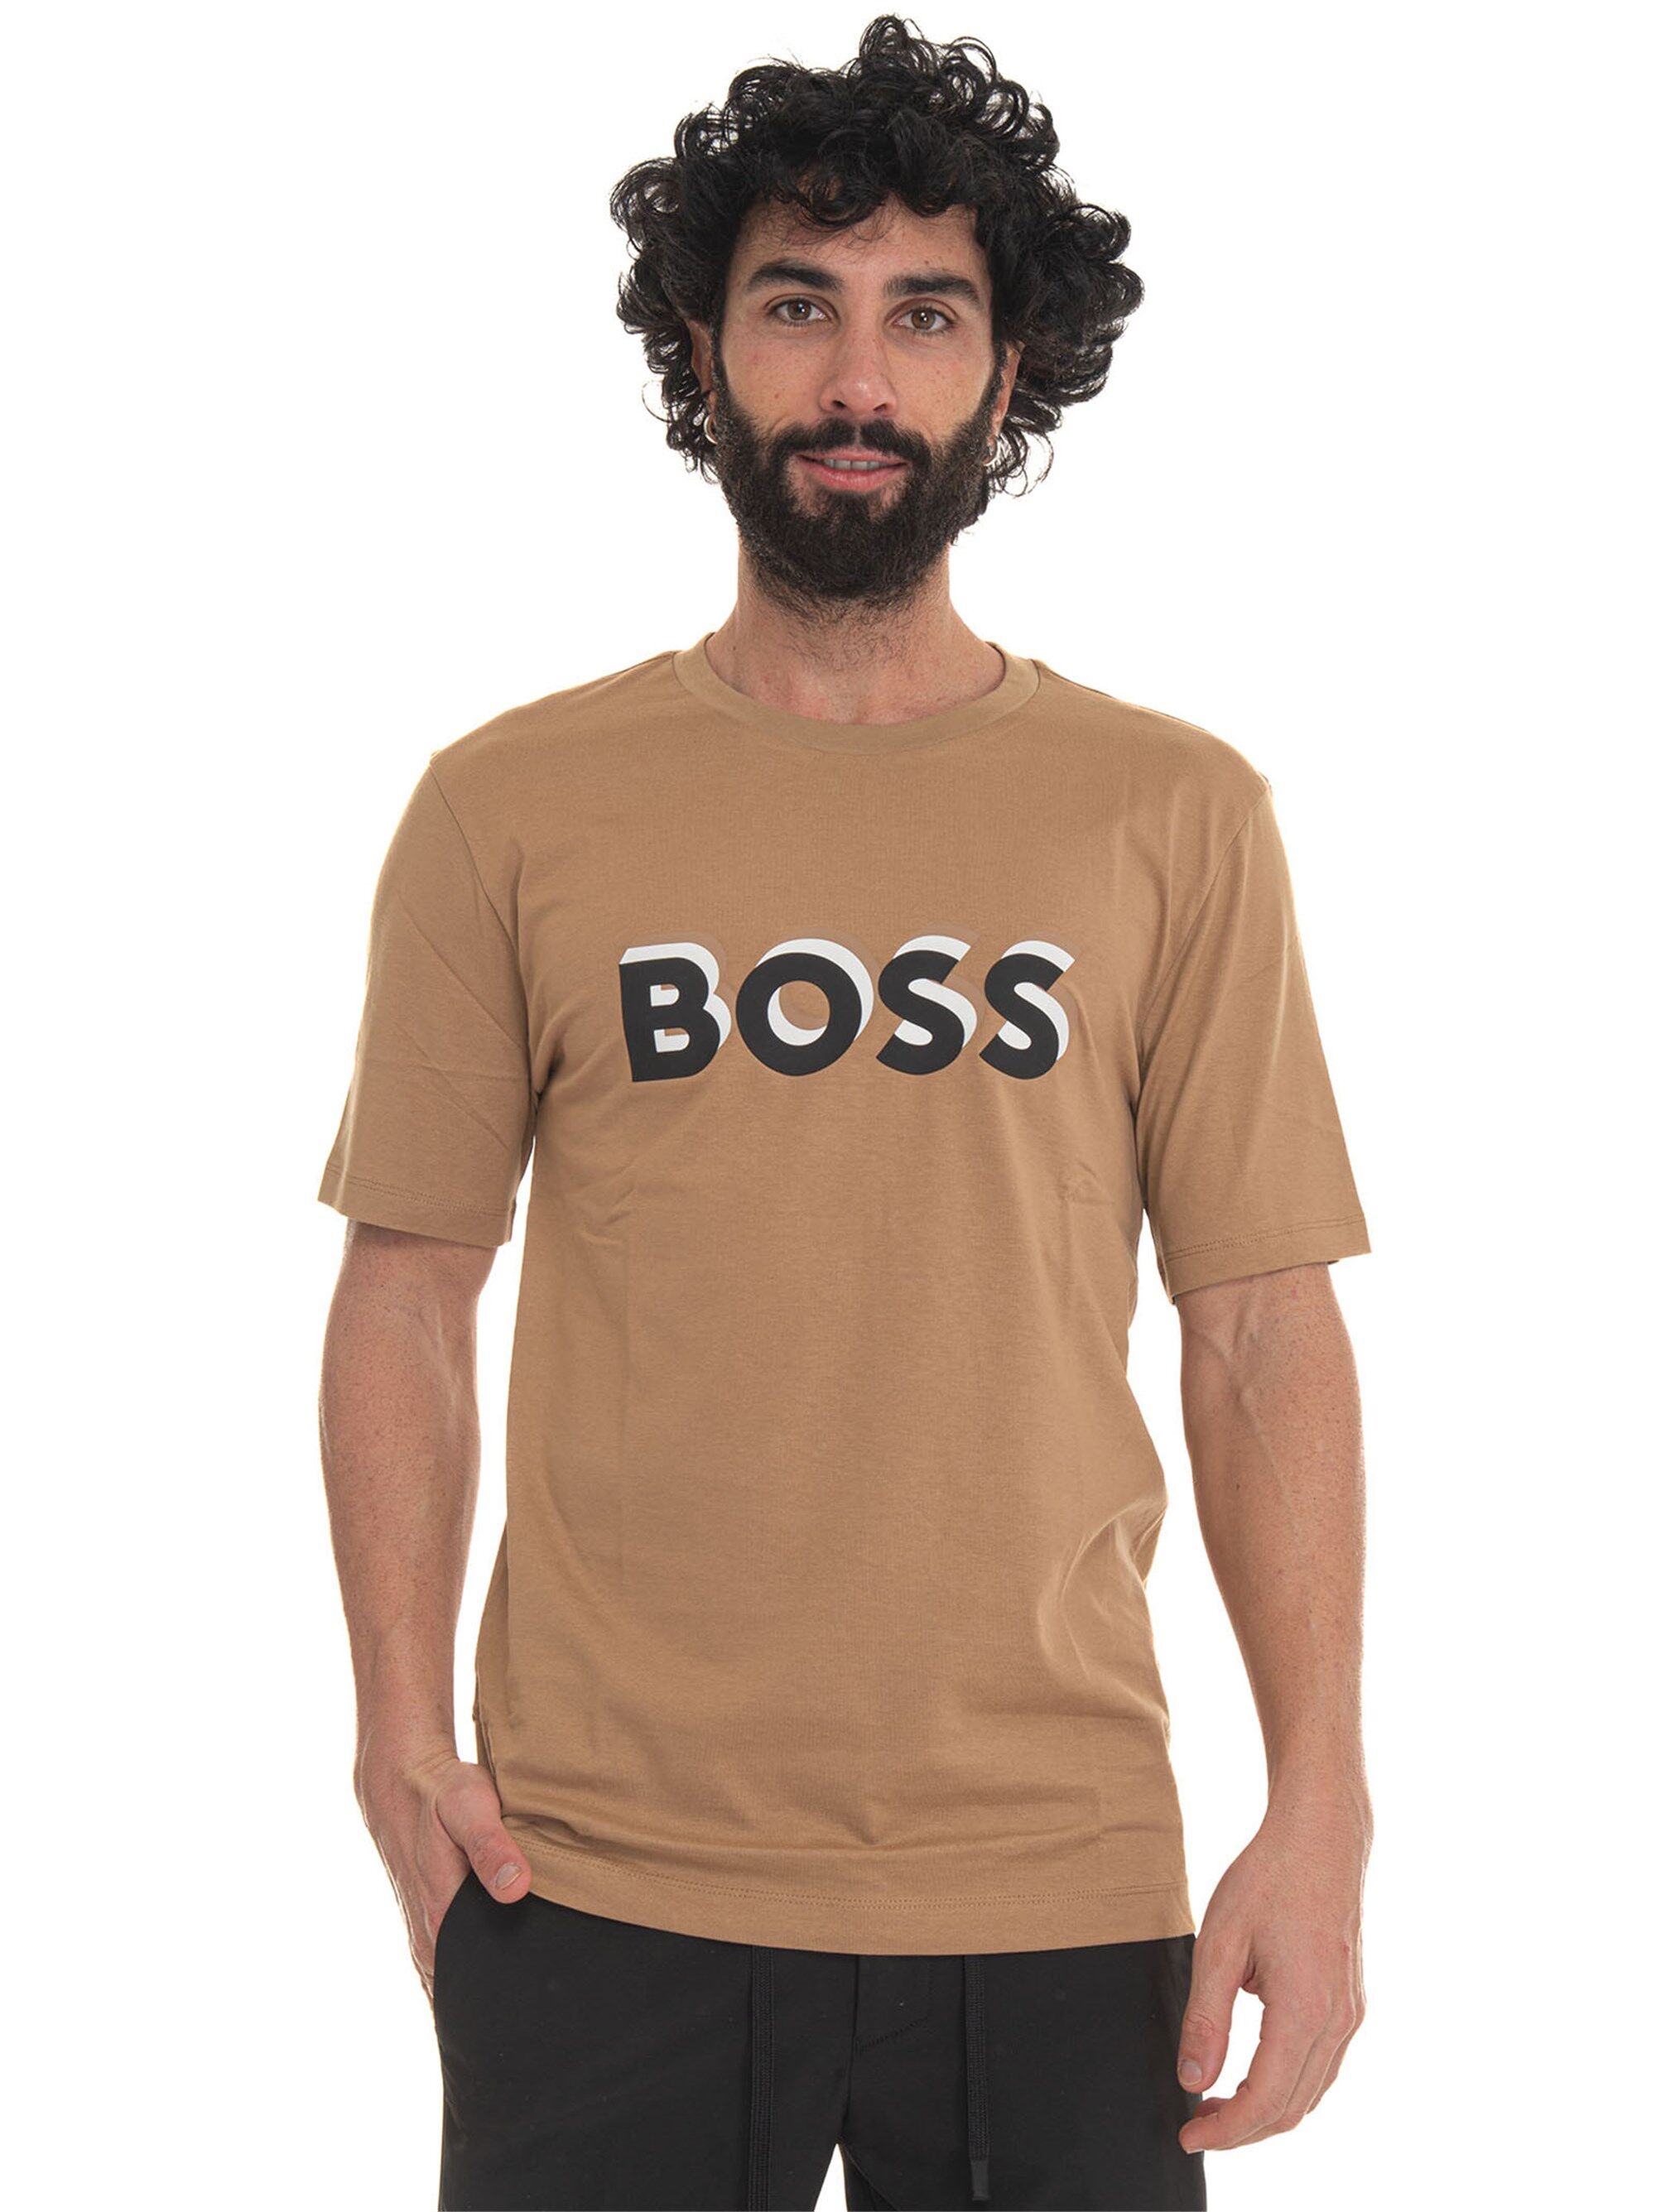 Boss T-shirt girocollo mezza manica Beige Uomo XL